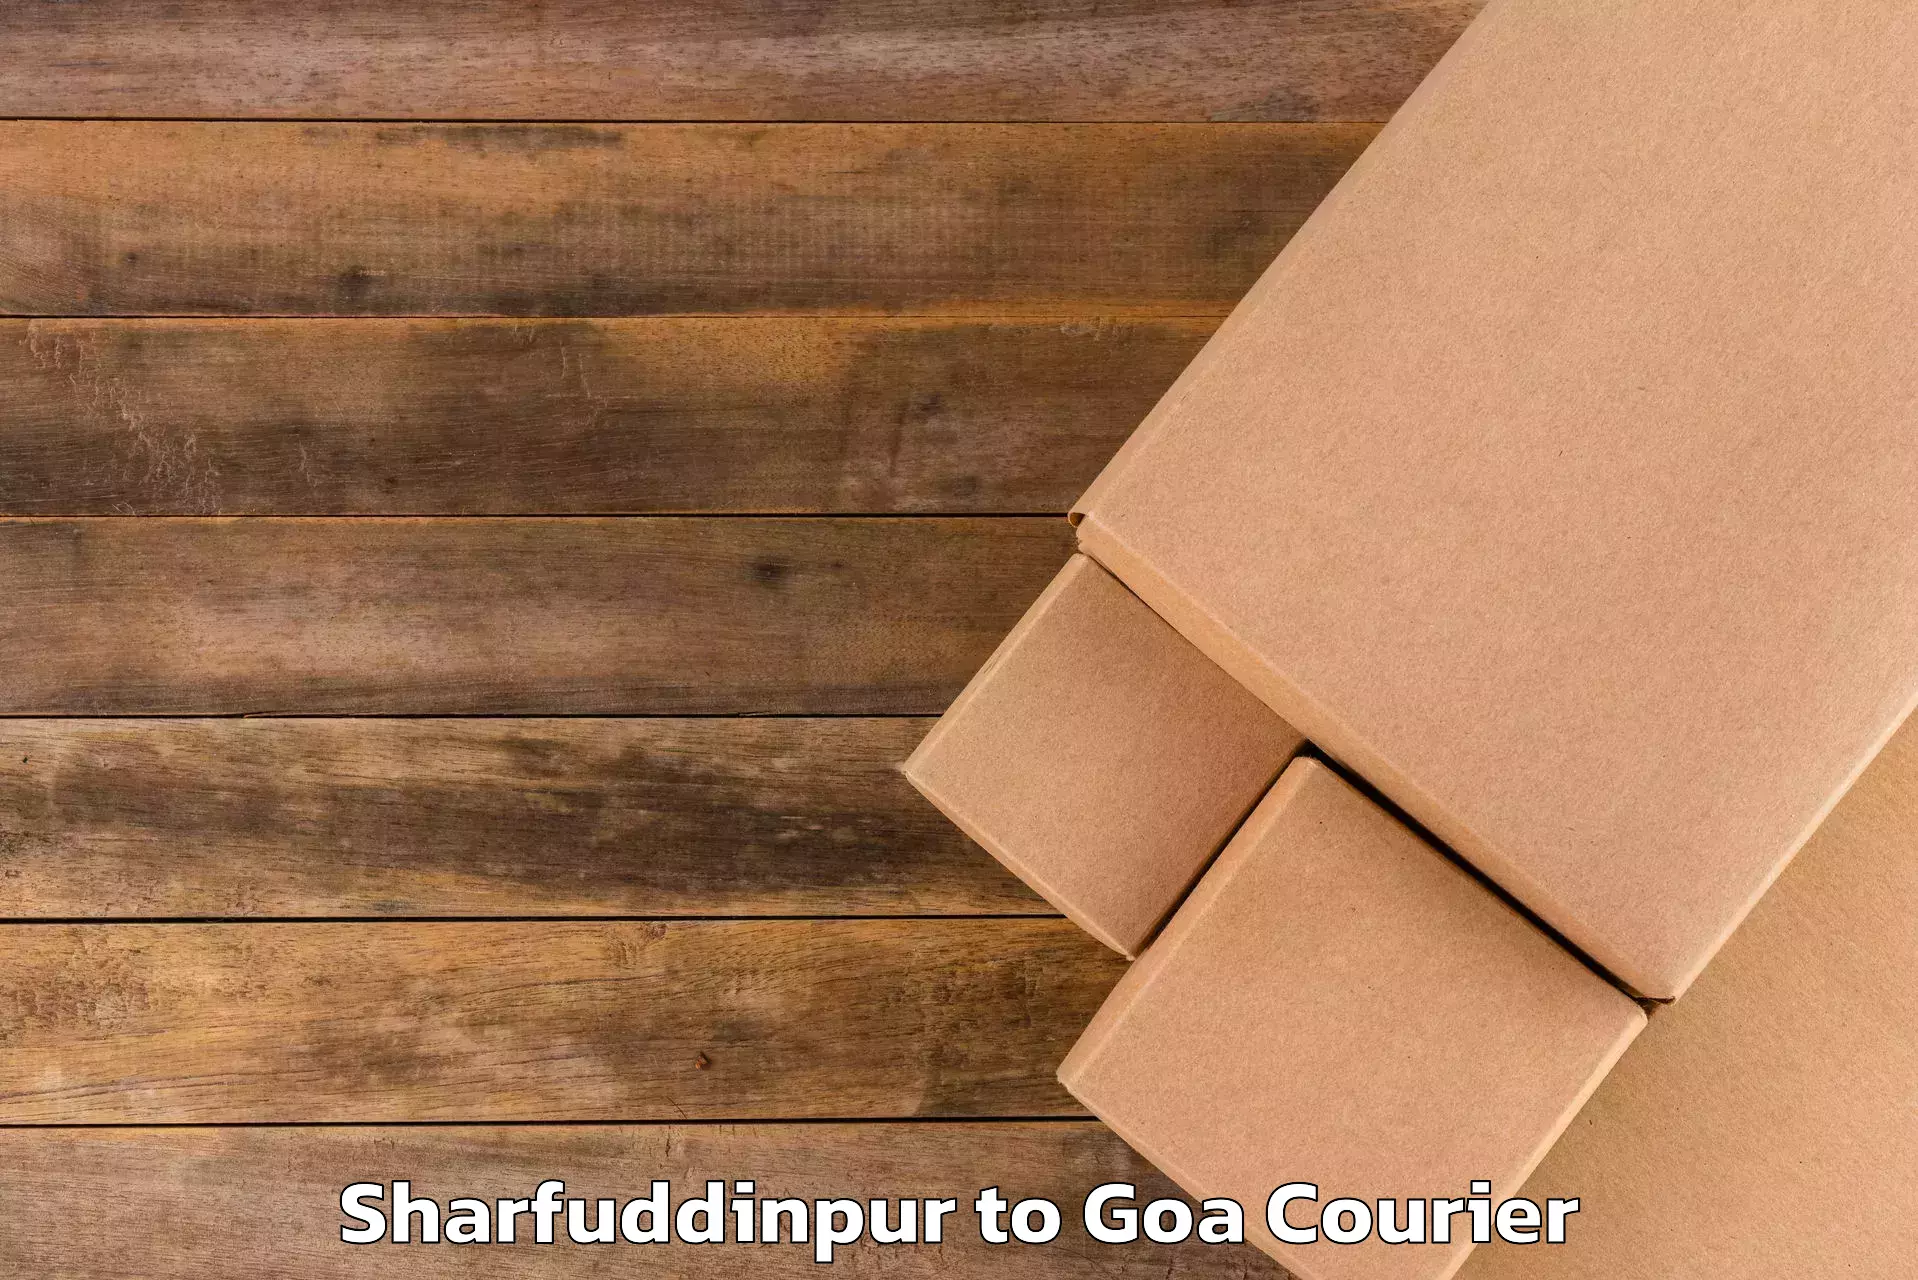 Luggage dispatch service Sharfuddinpur to Goa